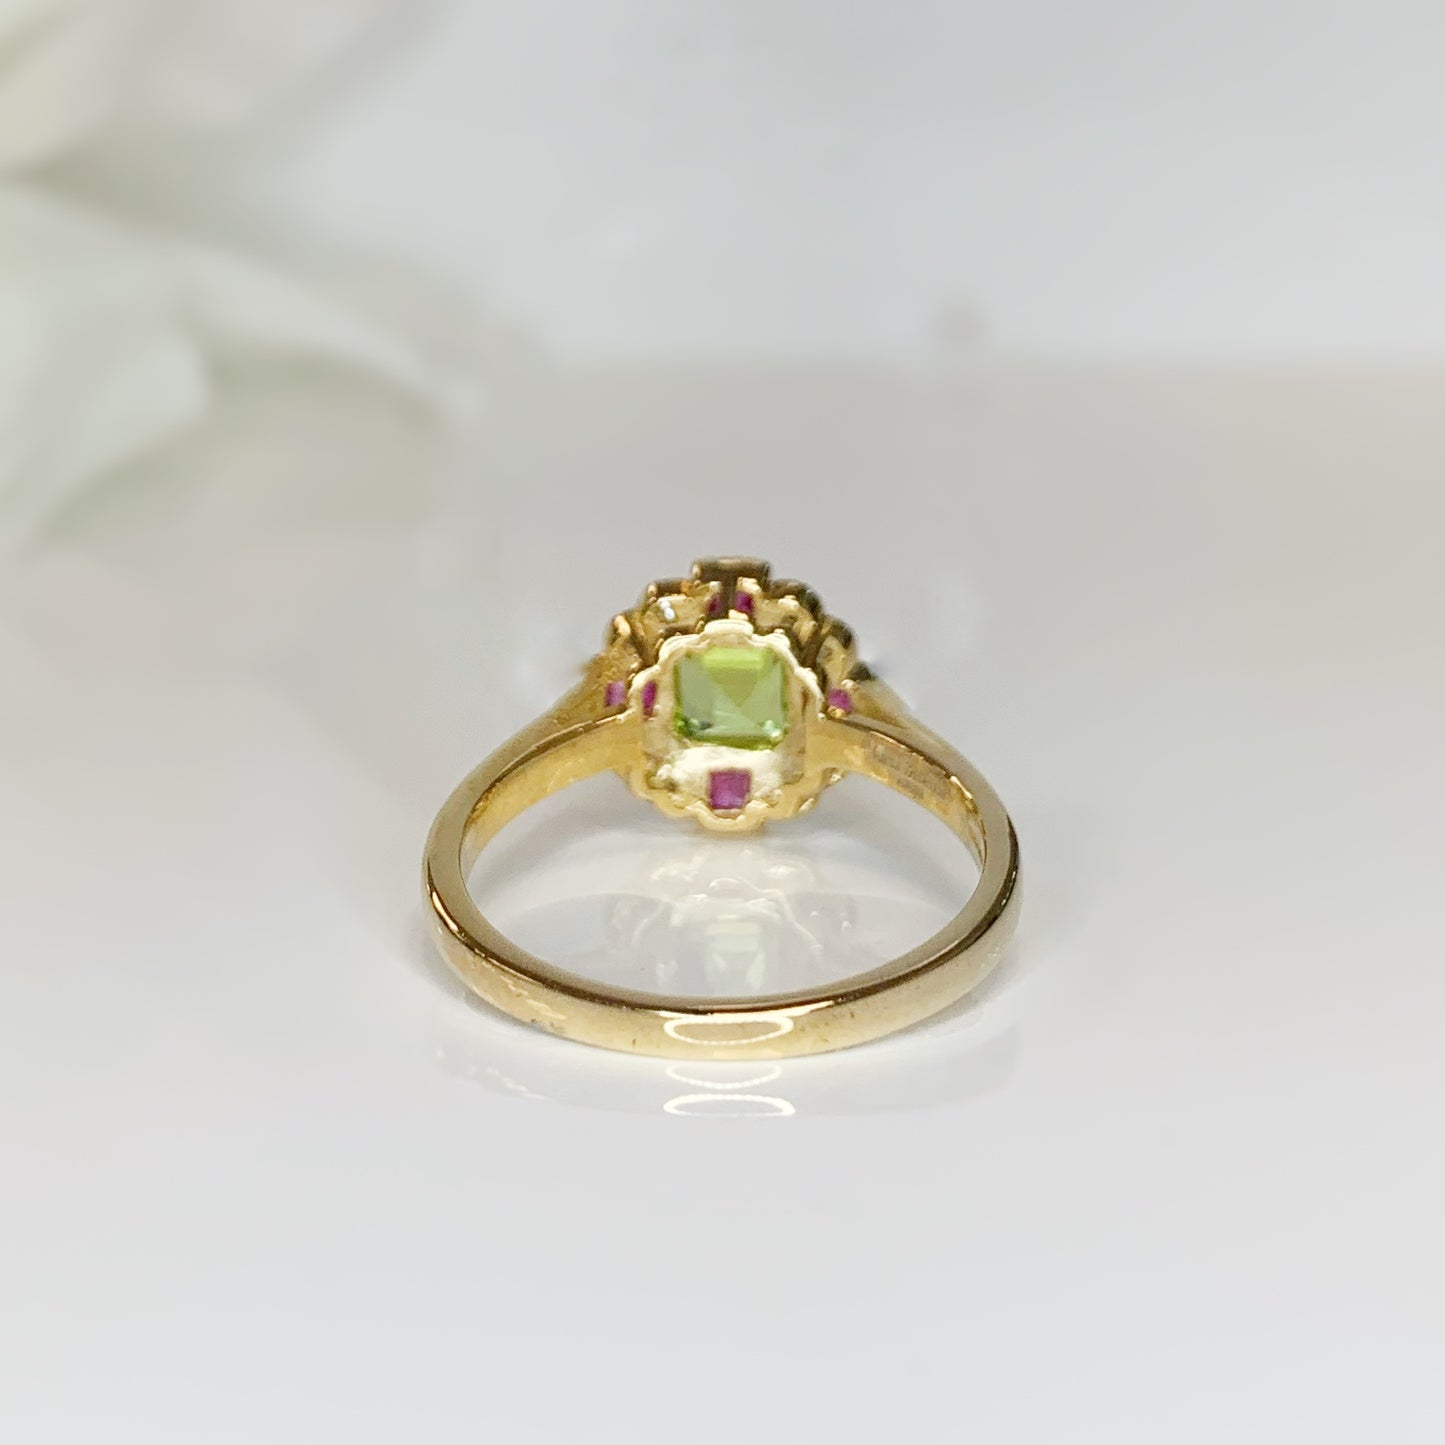 9ct Yellow Gold Art Deco Reproduction Peridot, Ruby and Diamond Ring – SIZE O